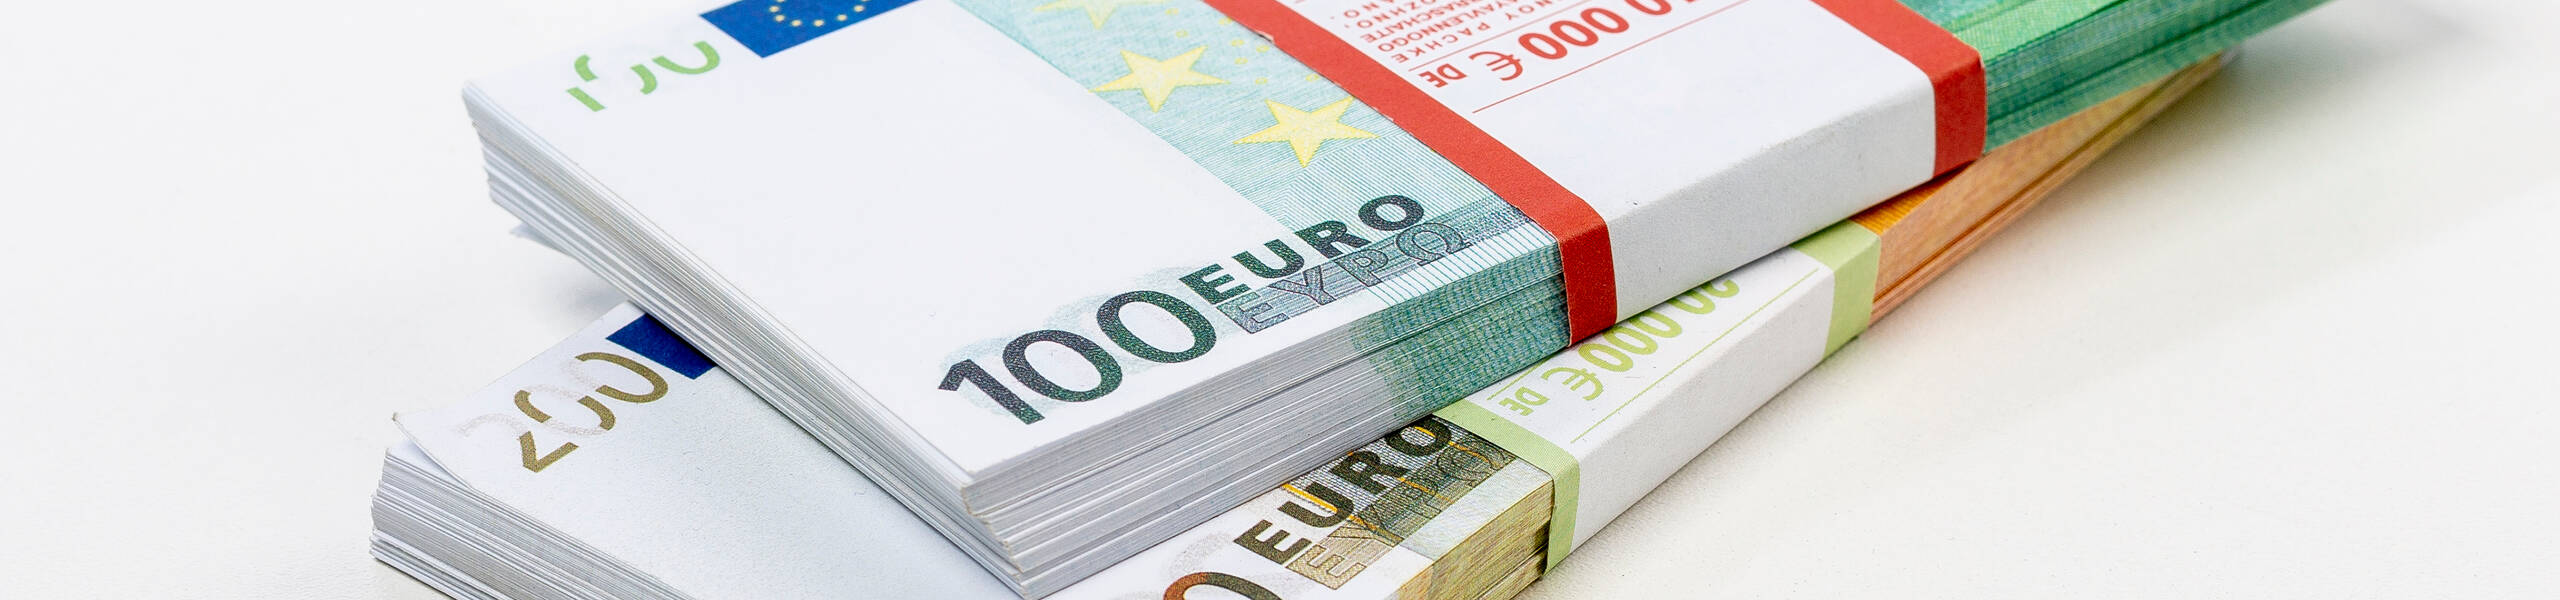 تحليل زوج اليورو دولار ليوم 22-6-2020